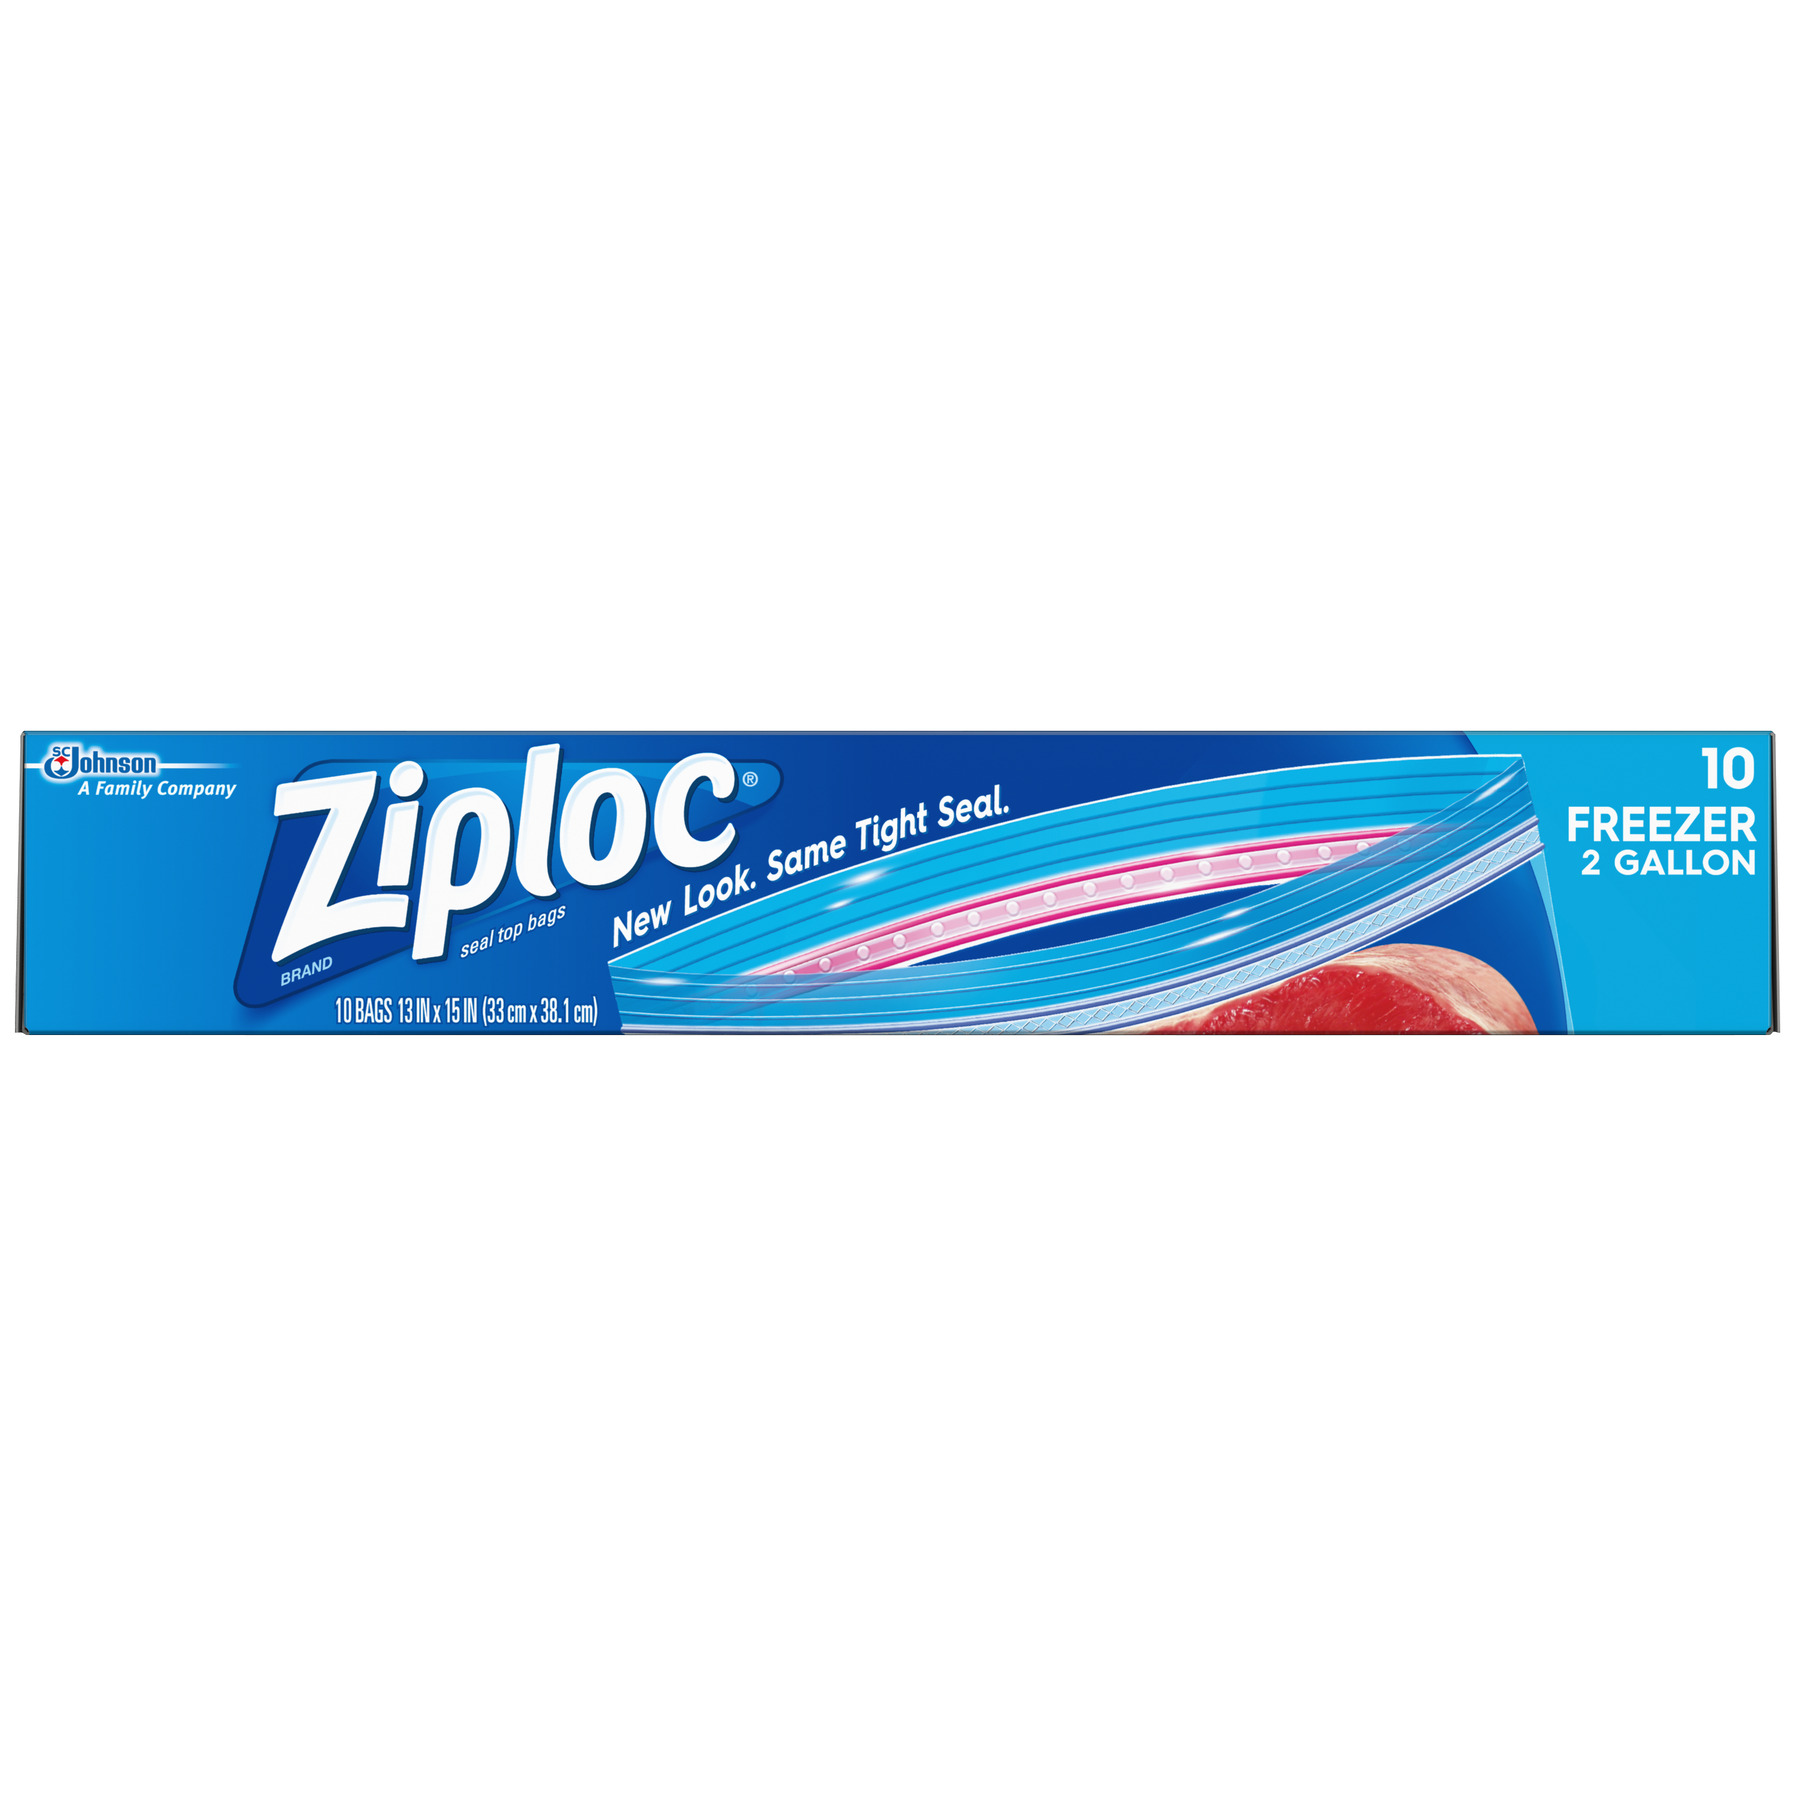 Ziploc 2 Gallon Double Zipper Freezer Bags, 100 Bags (SJN682254)